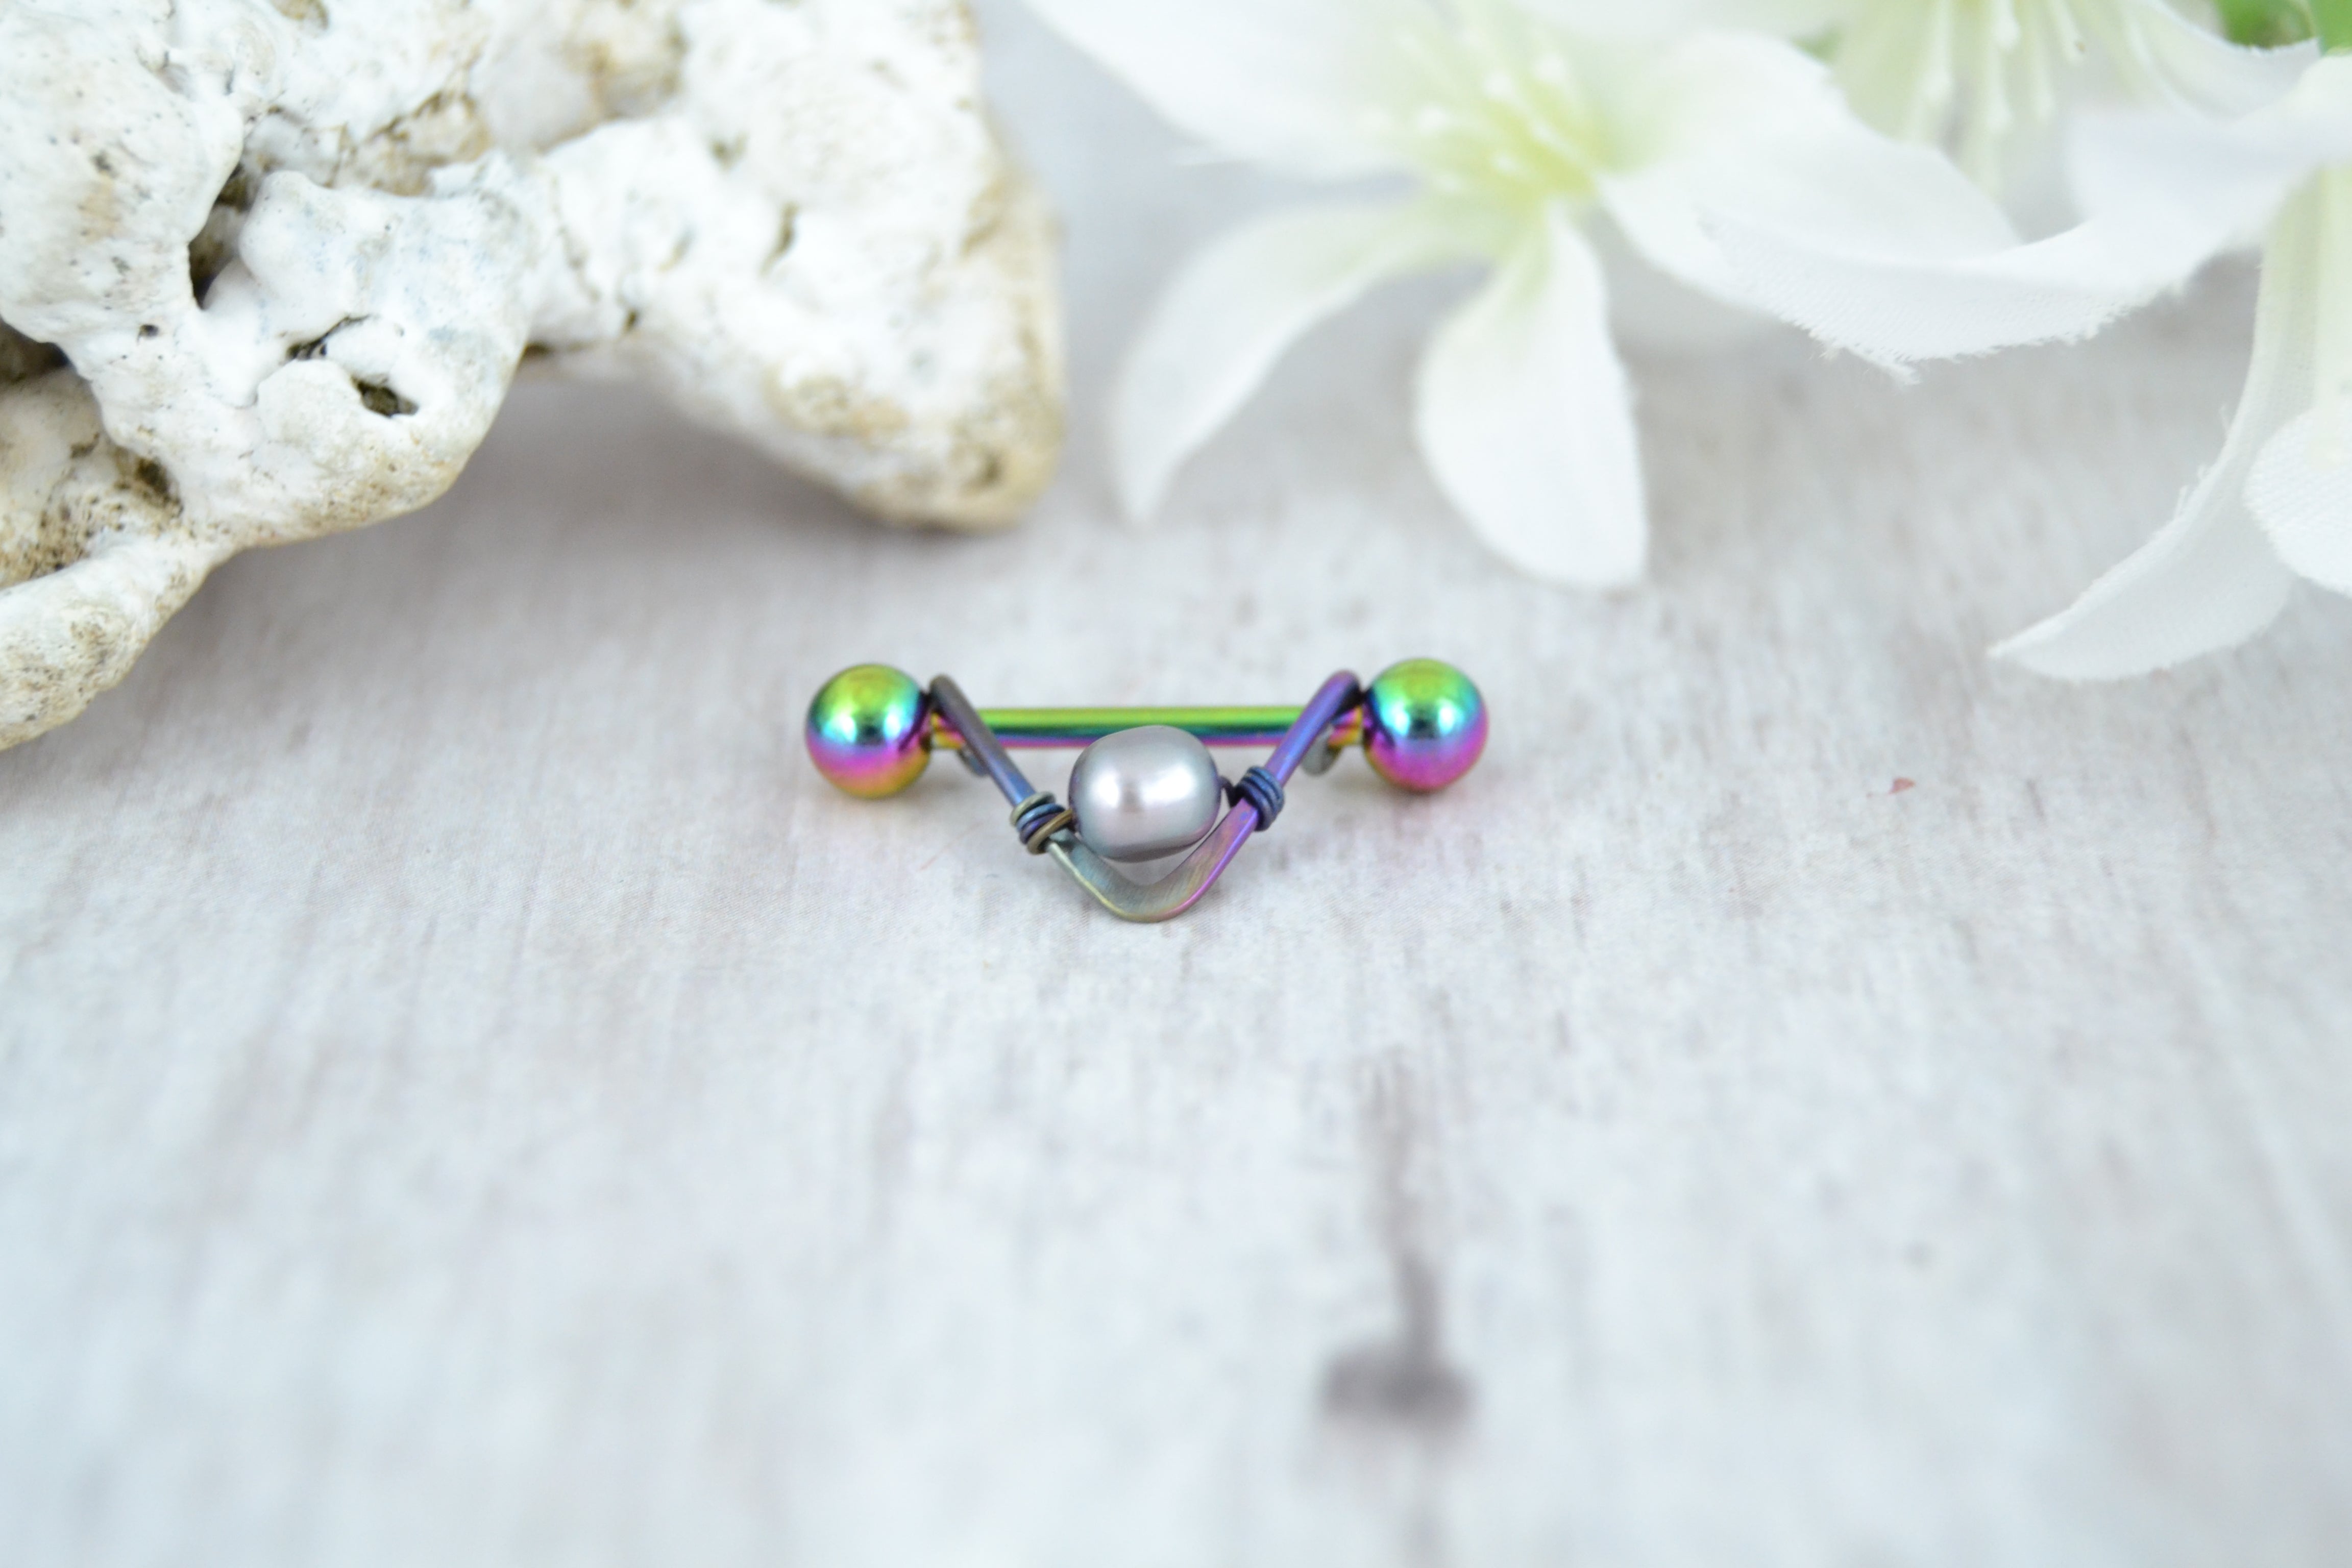 Pearl V Shaped Rainbow Nipple Ring - 1 pc